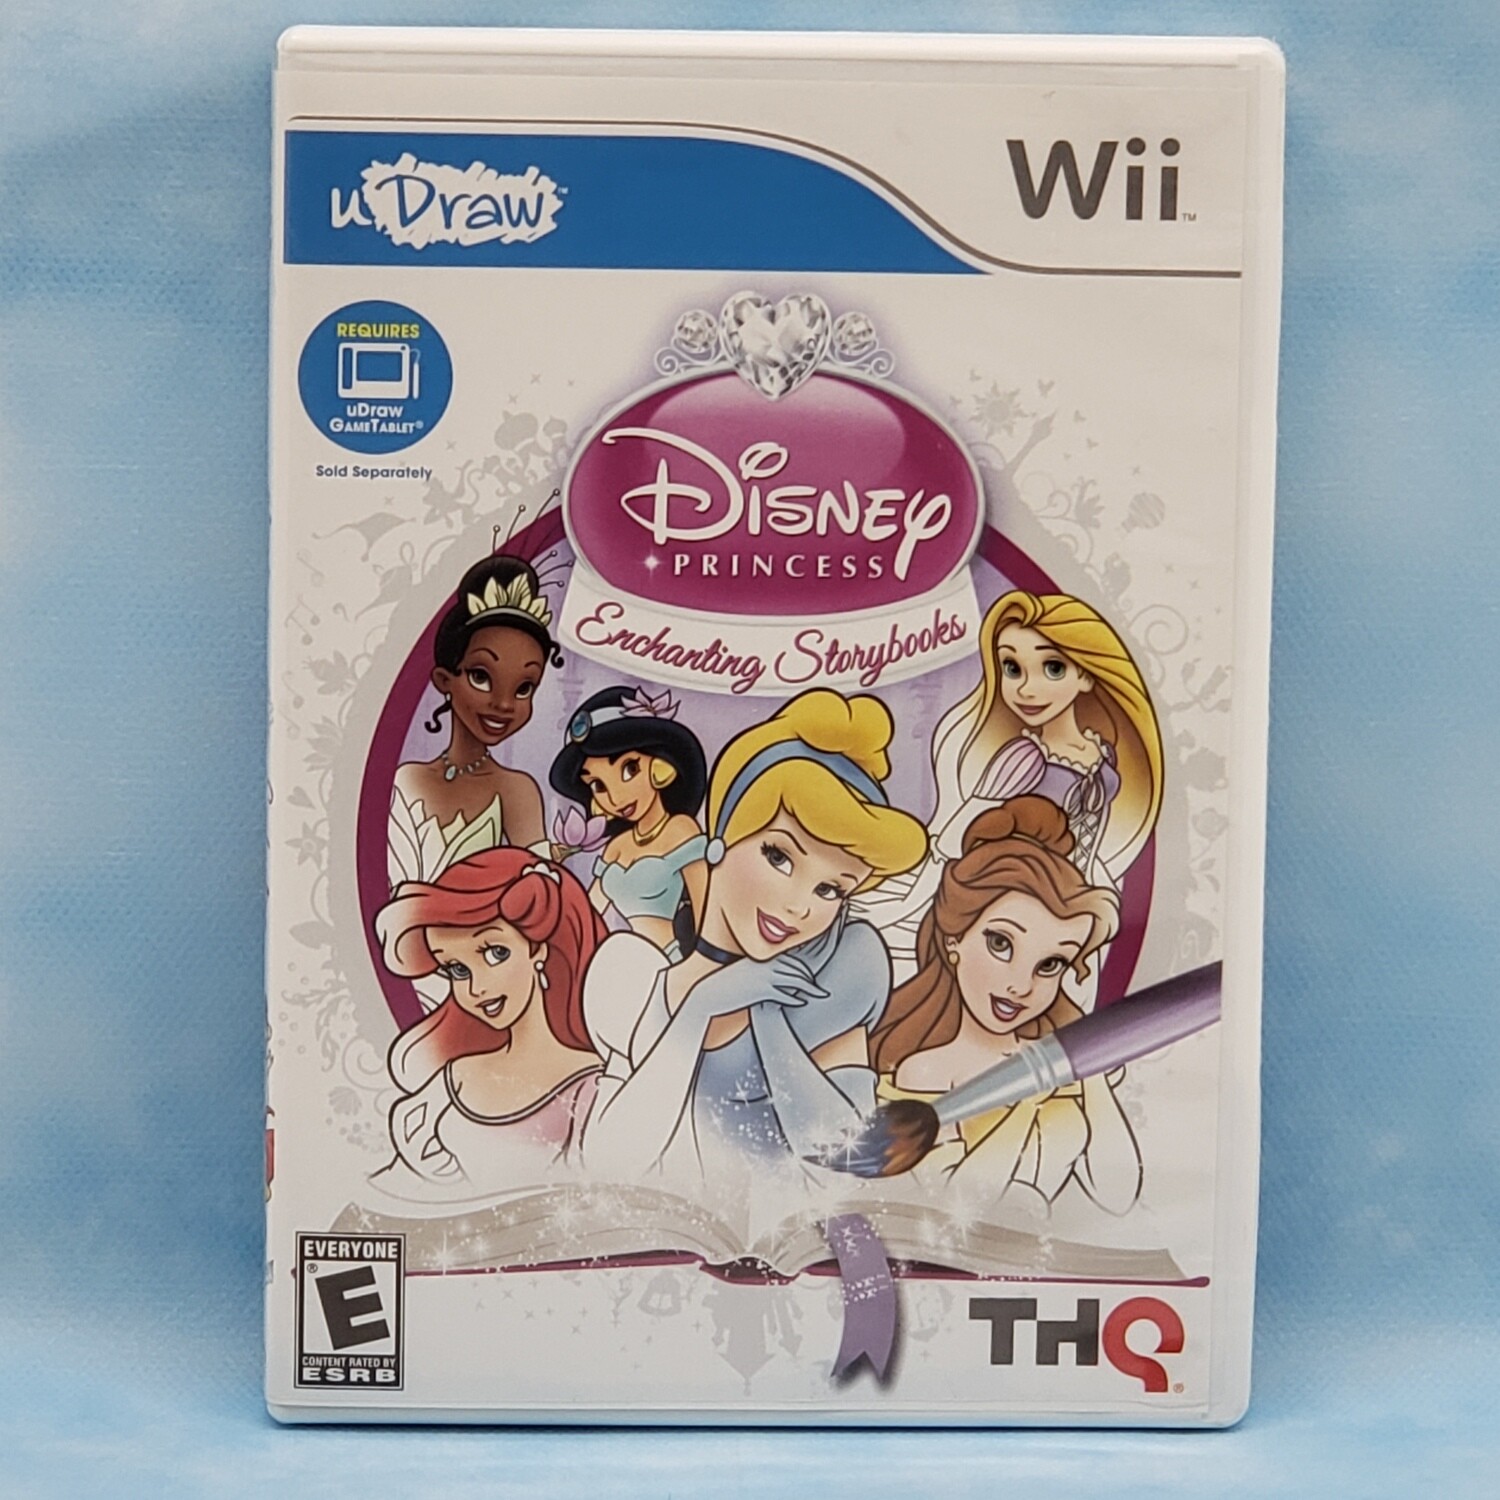 uDraw Disney Princess Enchanting Storybooks Video Game for Wii - CIB - Used